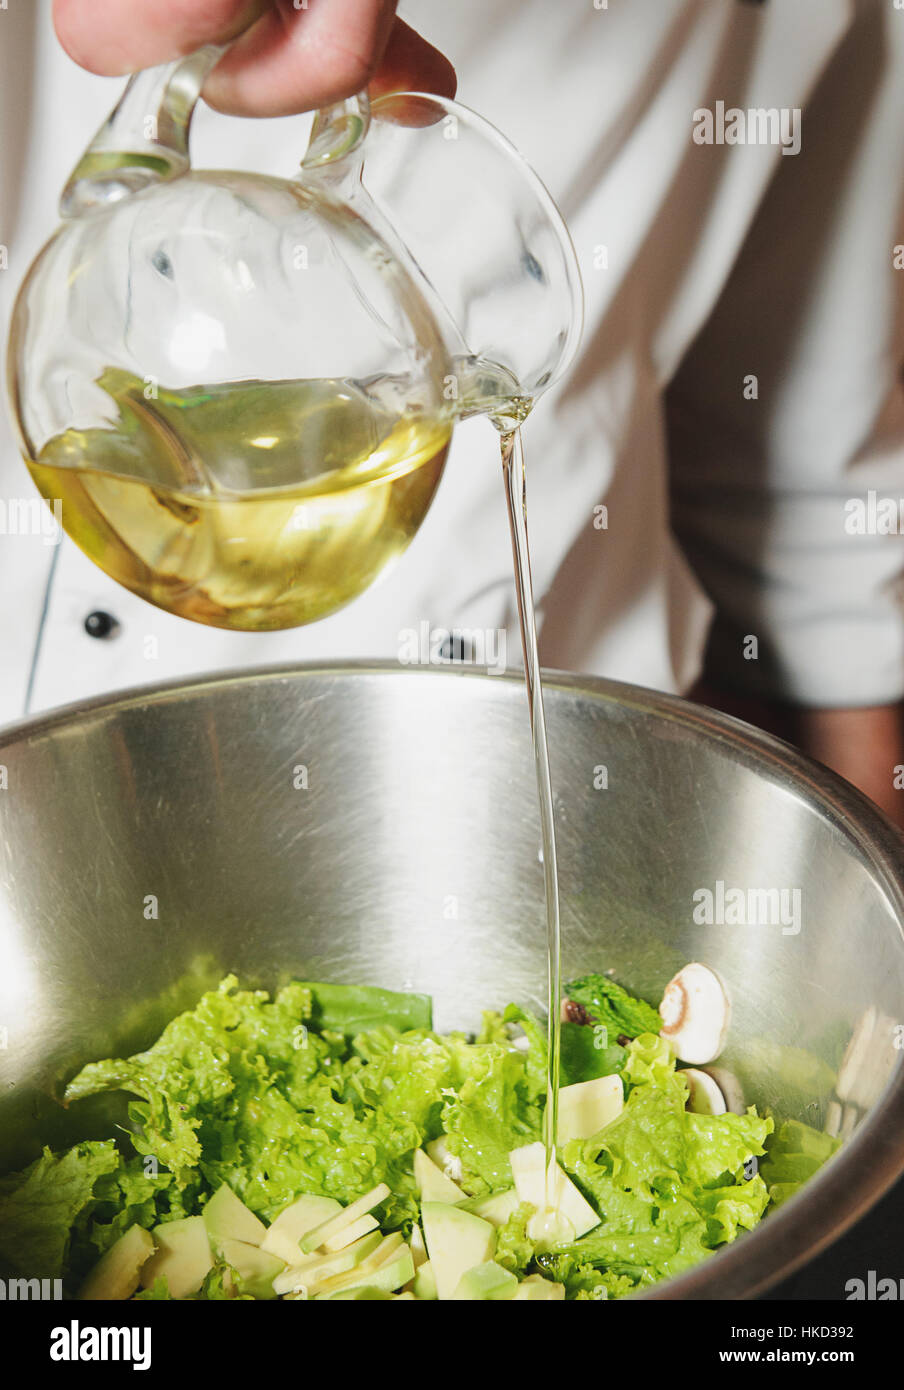 chef adding oil in vegetarian salad Stock Photo